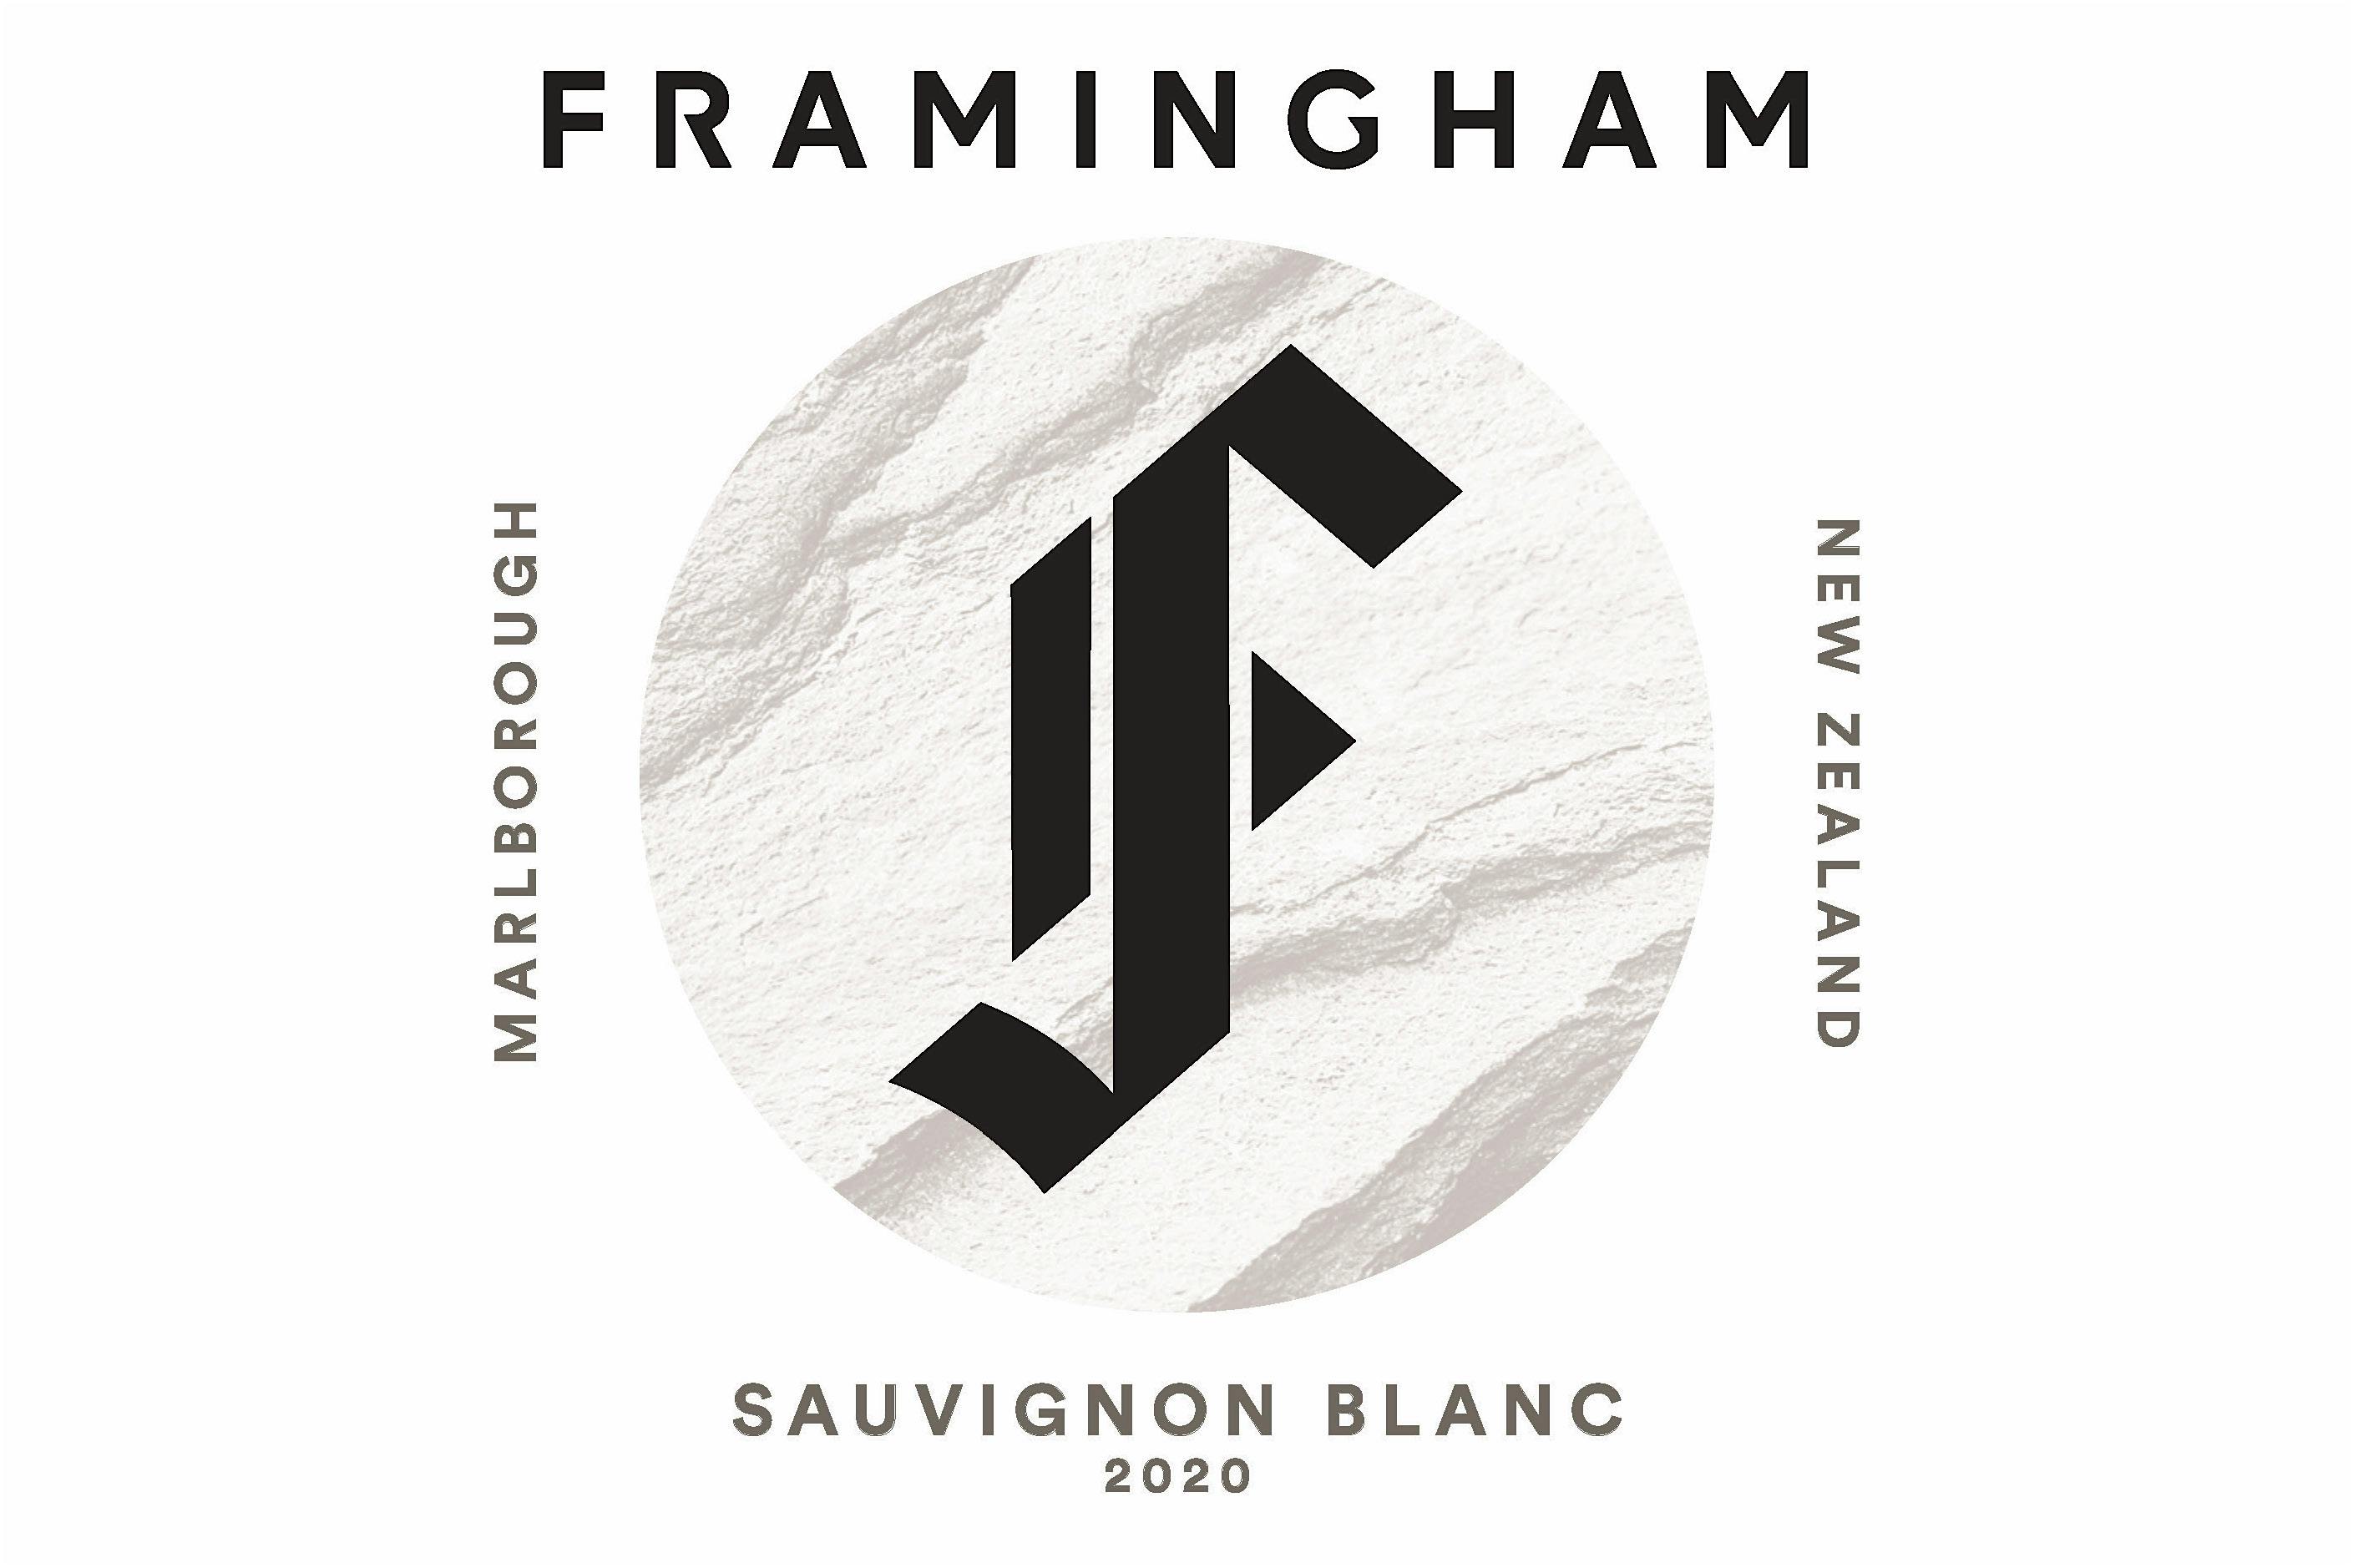 Label for Framingham